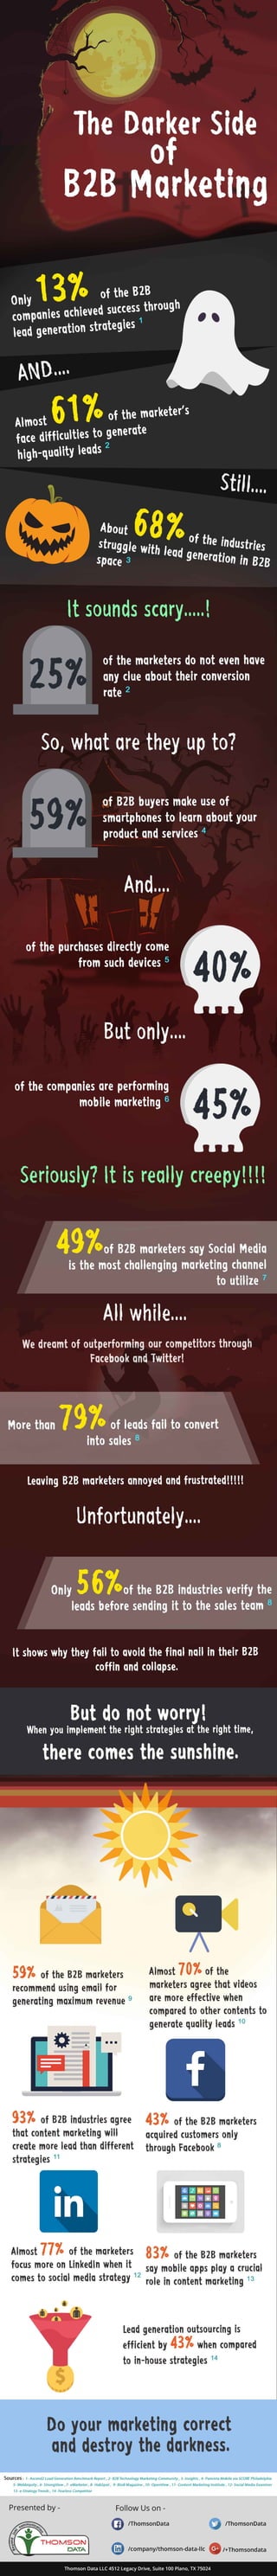 The Darker Side of B2B Marketing [Halloween Infographic]